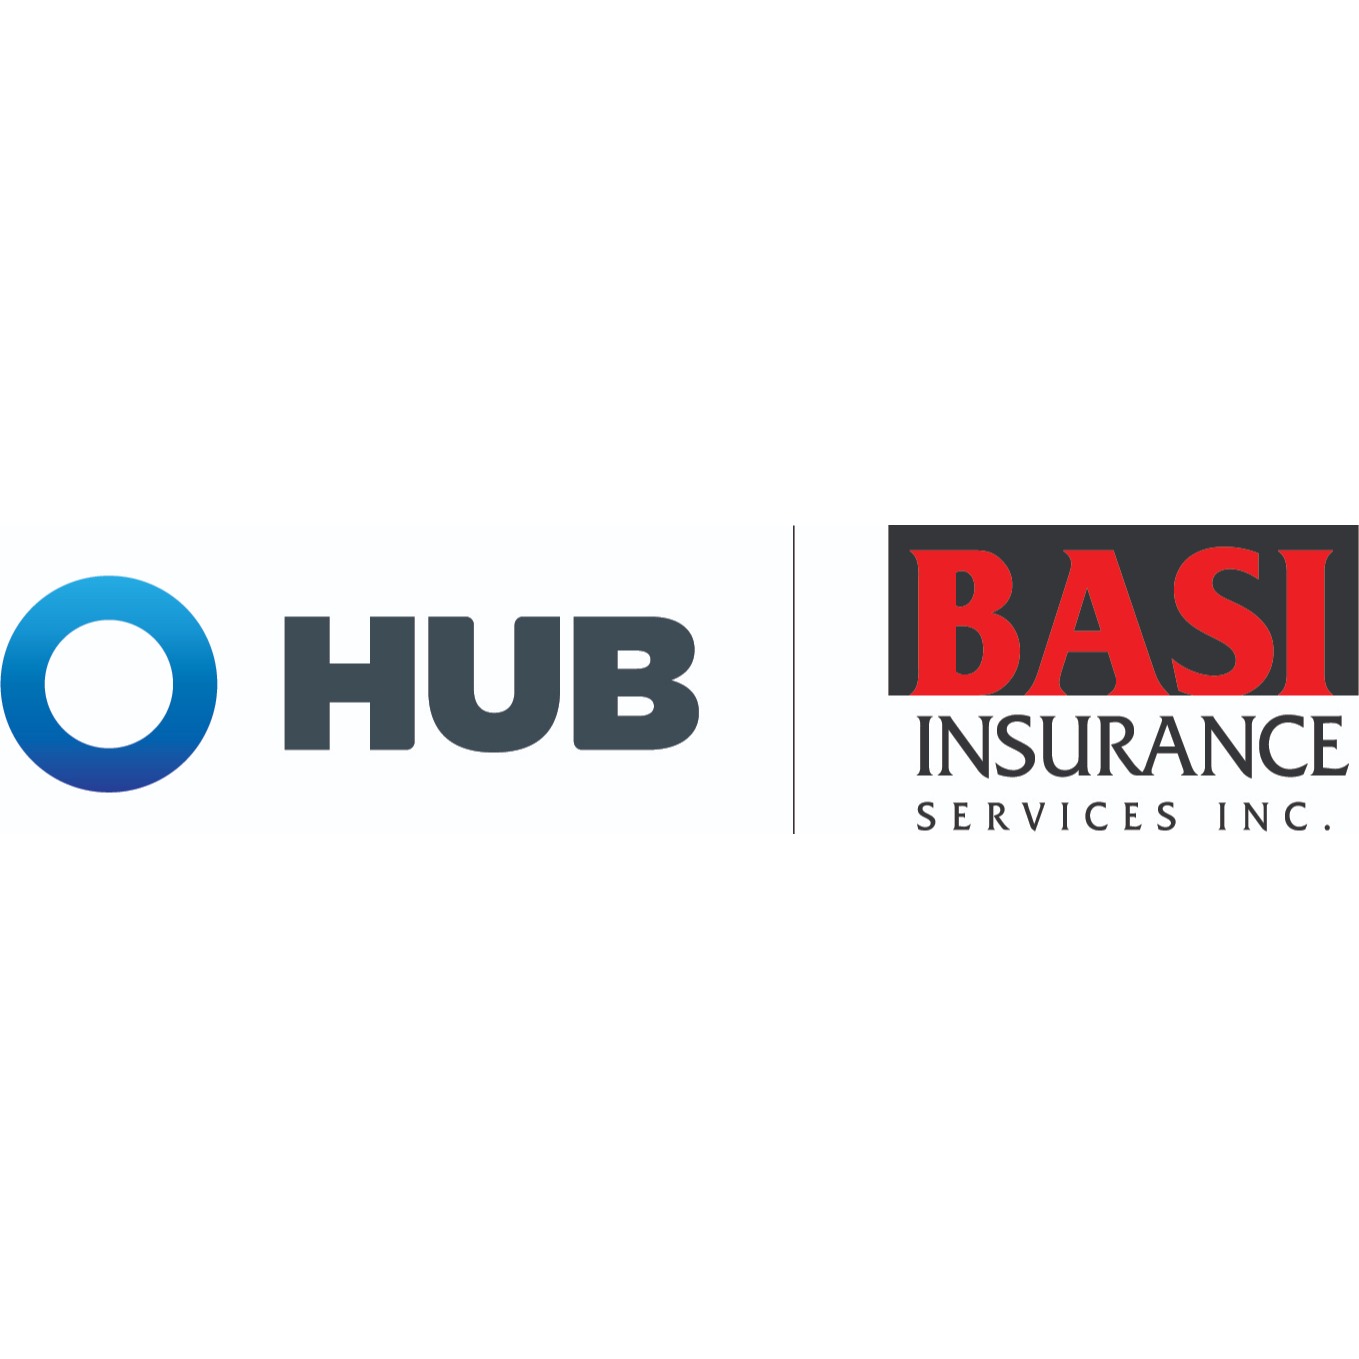 Hub and Basi Insurance partner logo